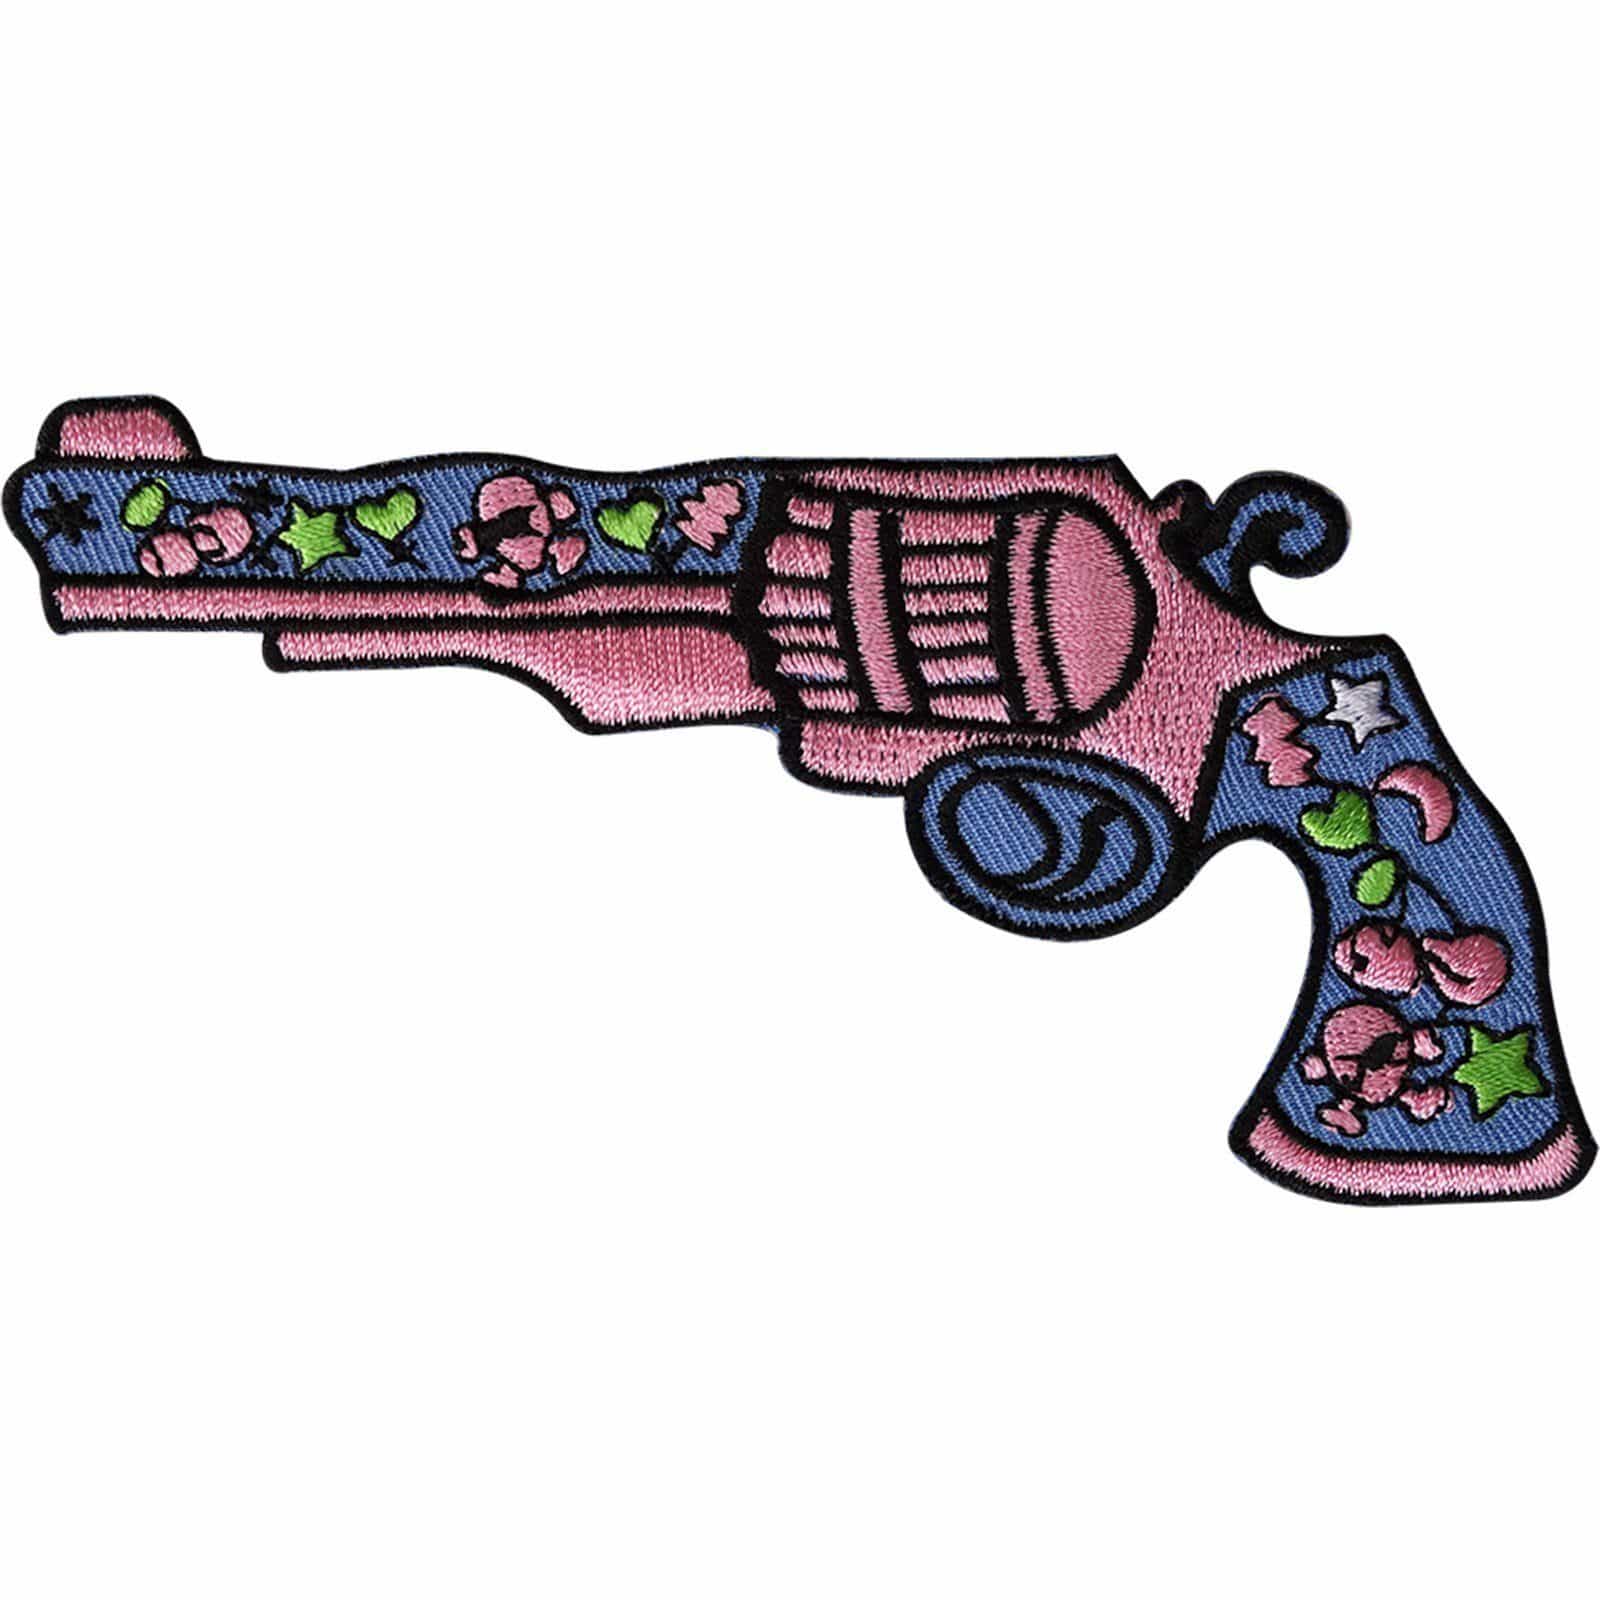 Girls Pink Cowboy Pistol Gun Patch Embroidered Badge Iron Sew On Shirt Jeans Bag